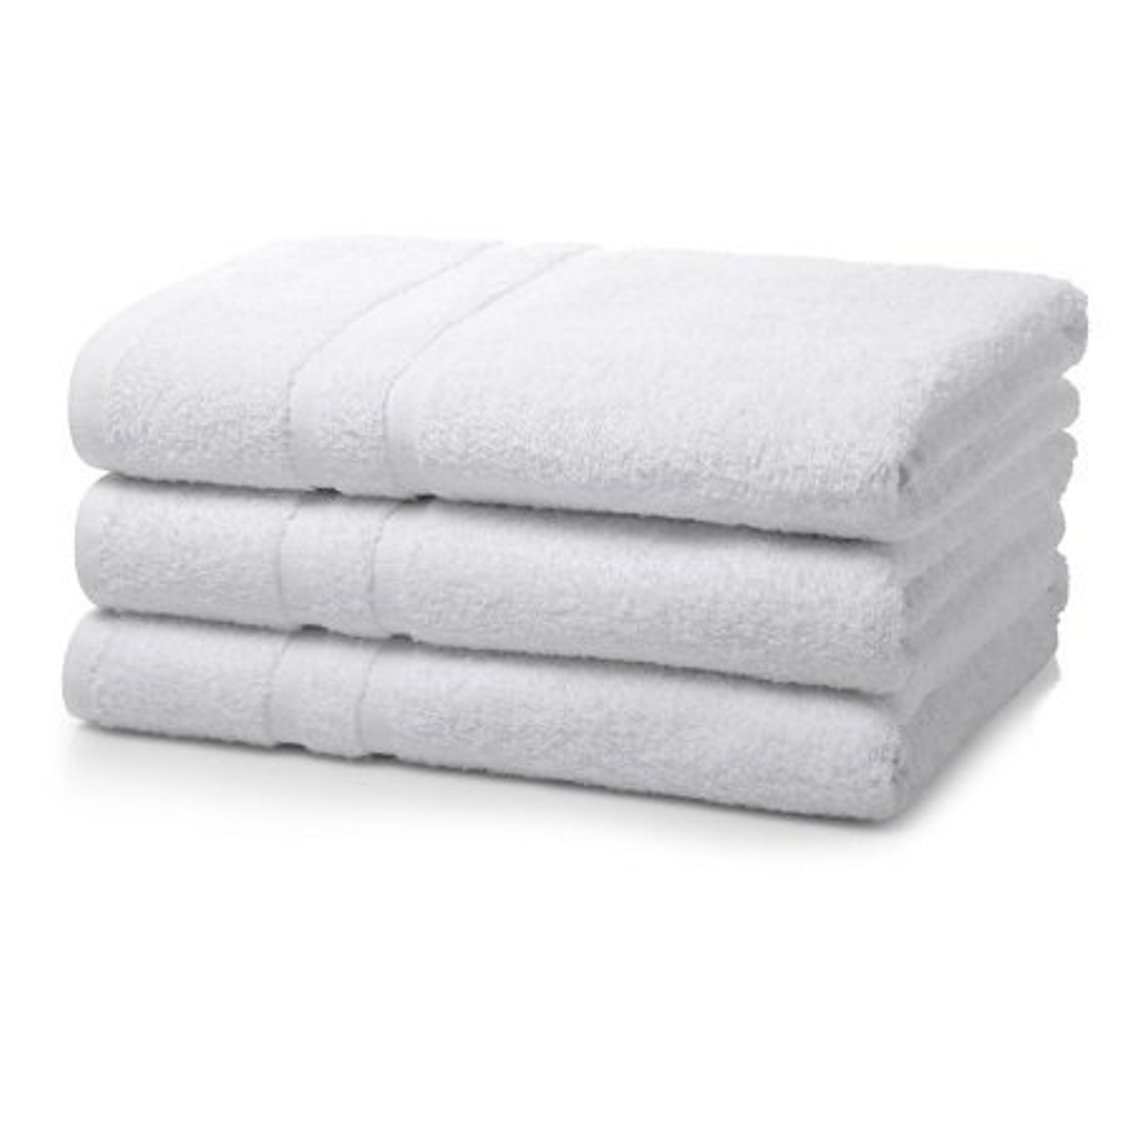 2X Extra Large Super Jumbo Bath Sheet Towels 100x200cm Luxury 100% Cotton  600GSM